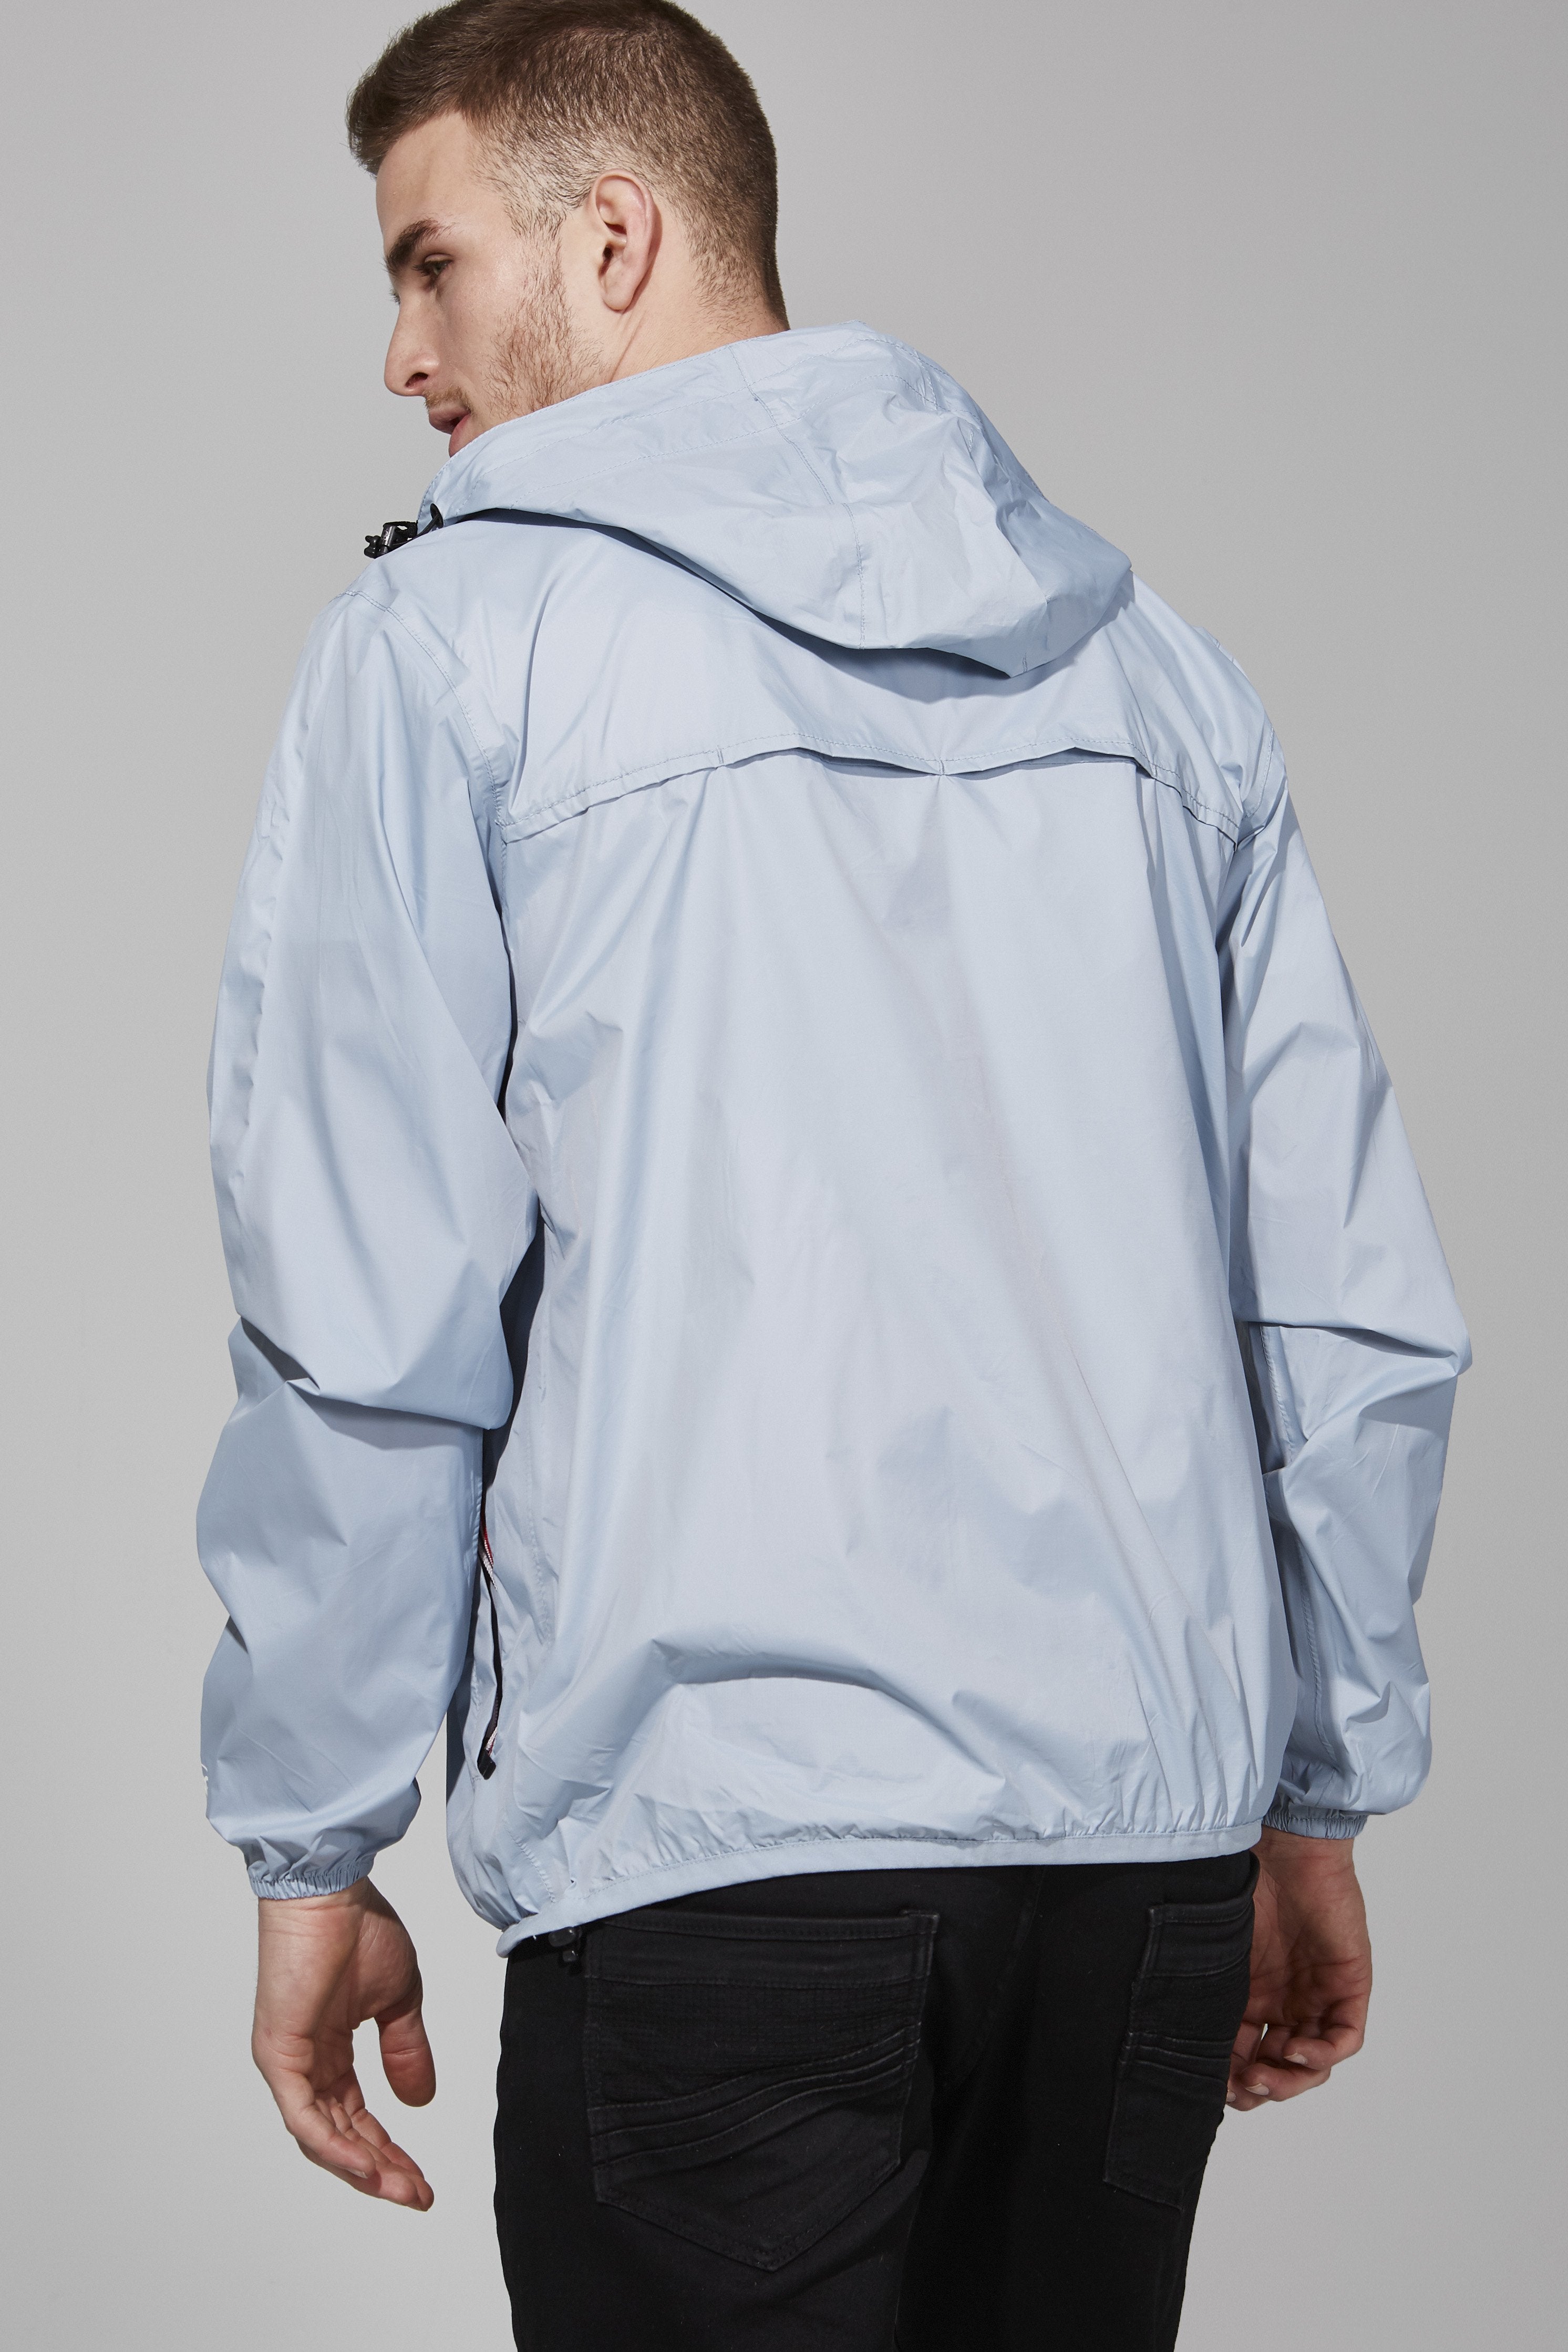 Max - Celestial Blue Full Zip Packable Rain Jacket - O8lifestyle.